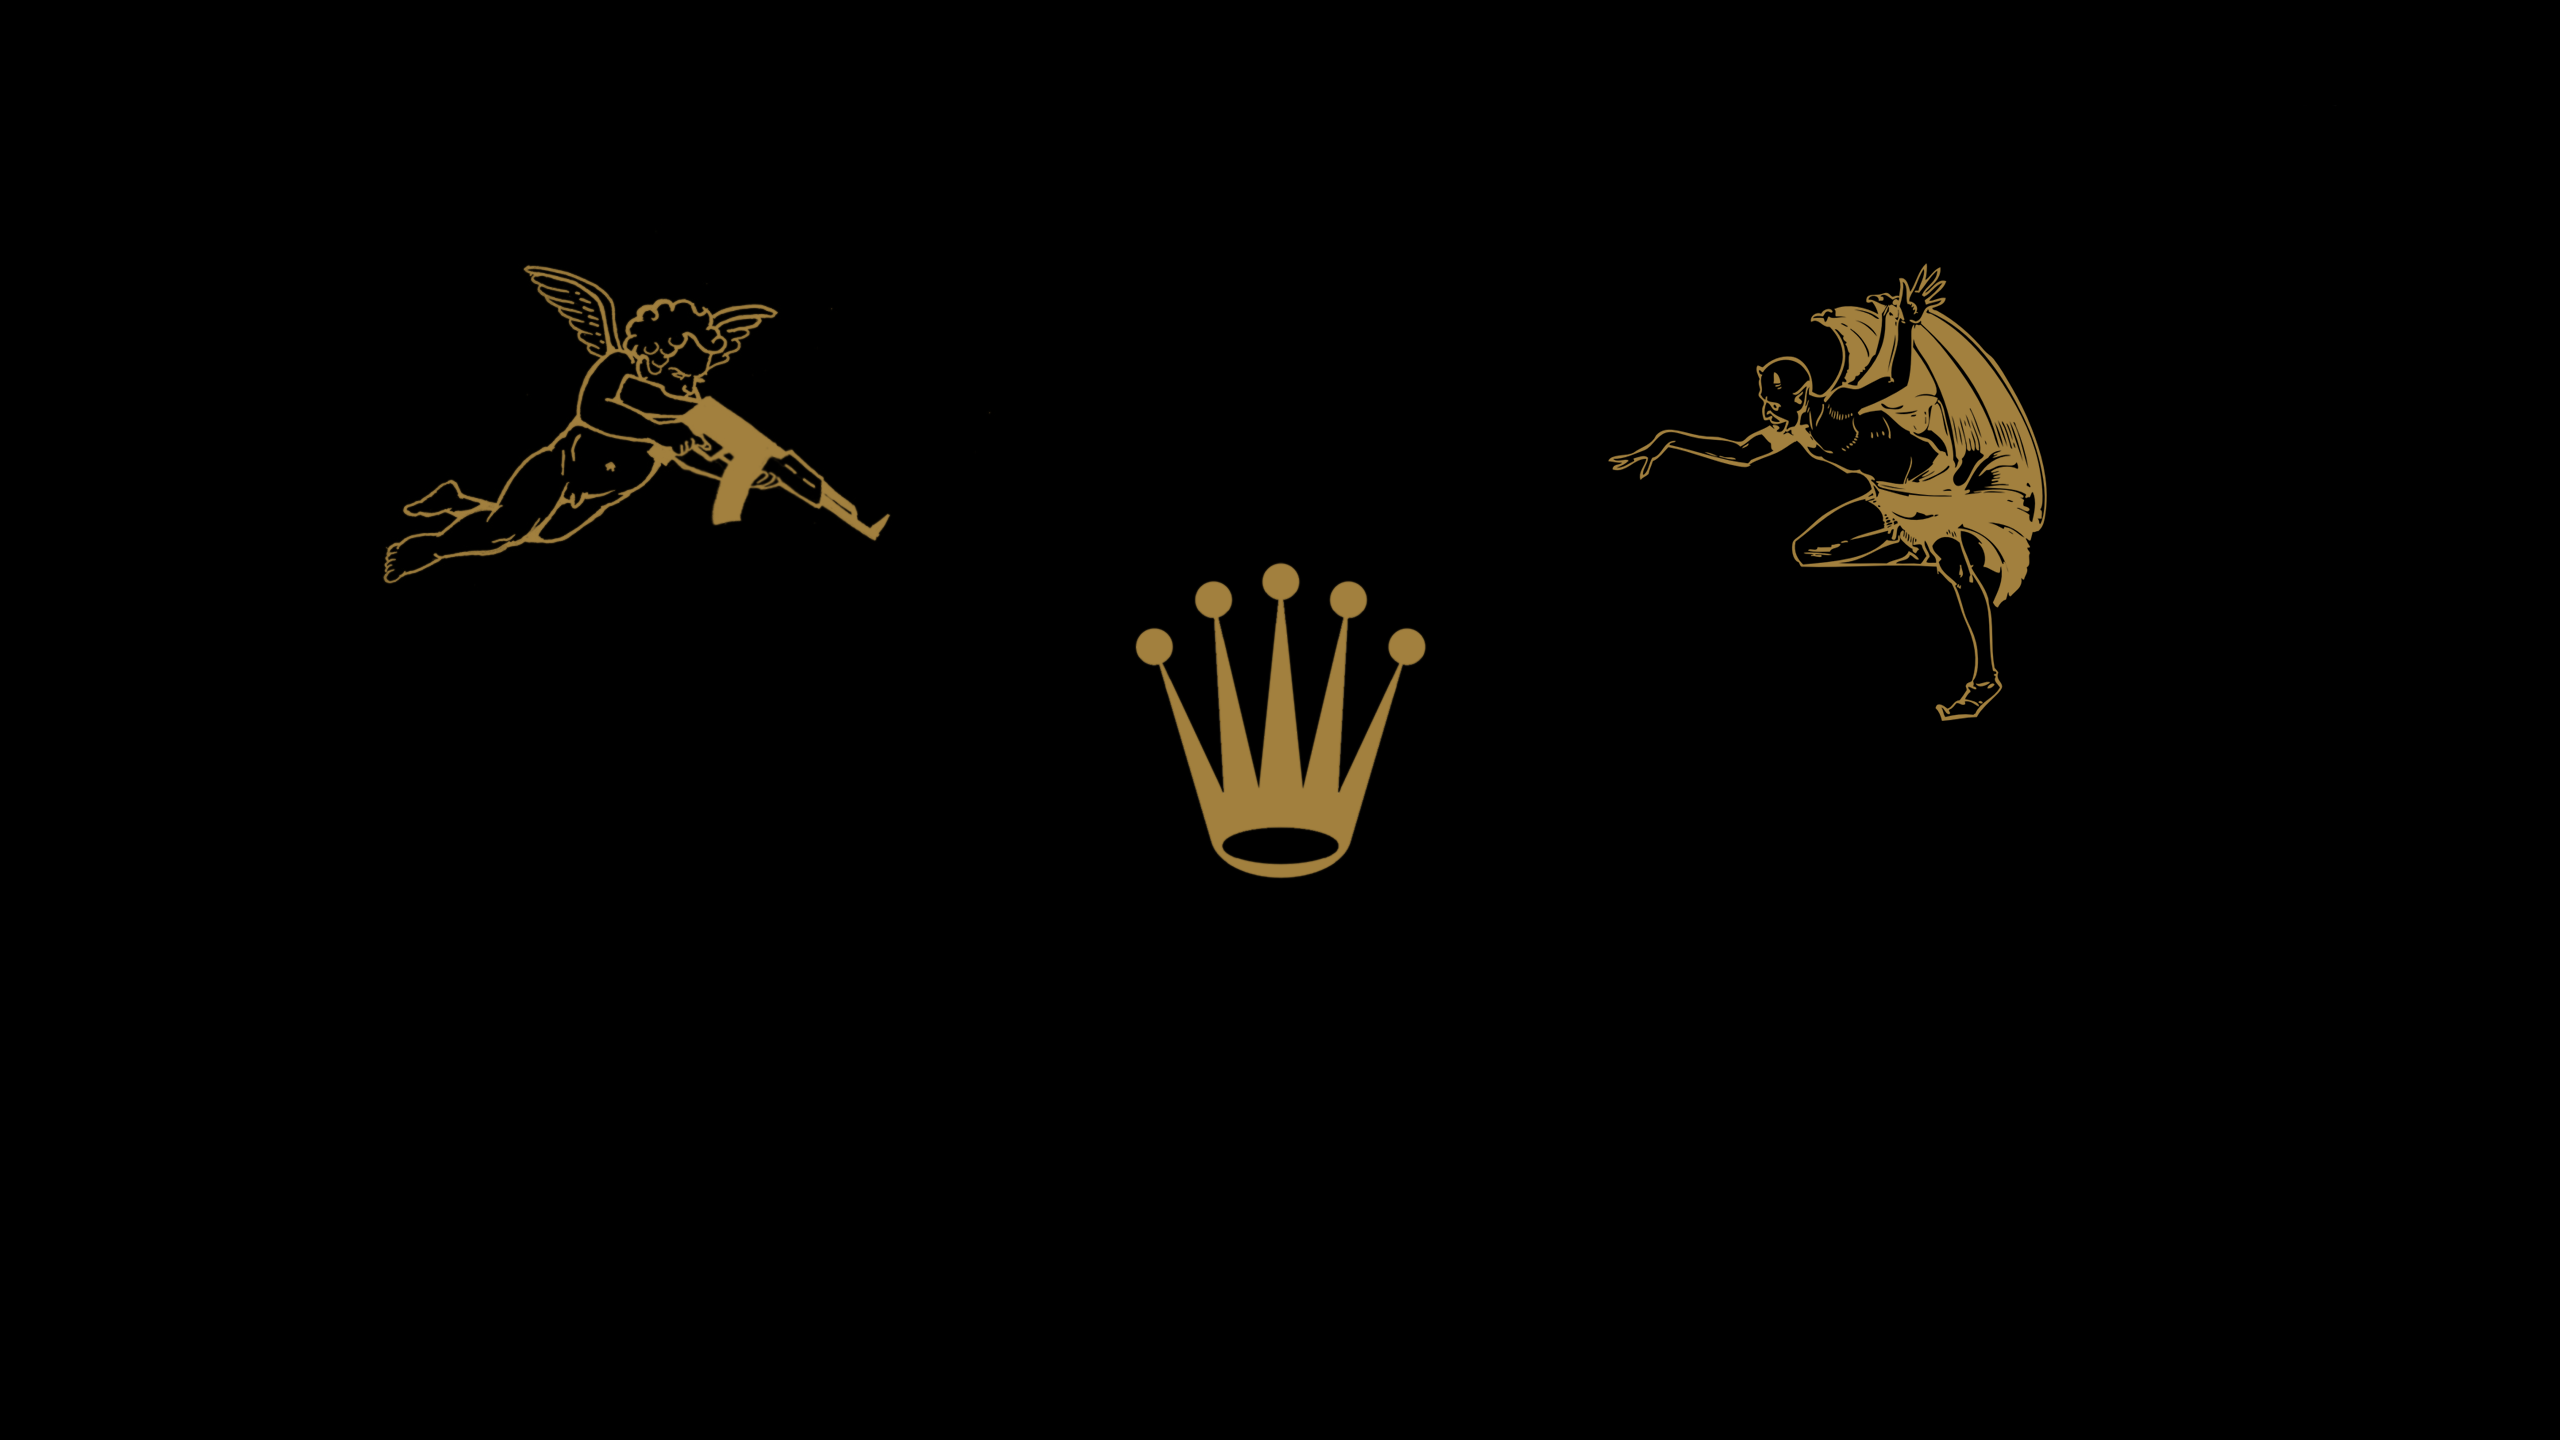 Logo Black Background Drawing Rolex Devils AK 47 2560x1440